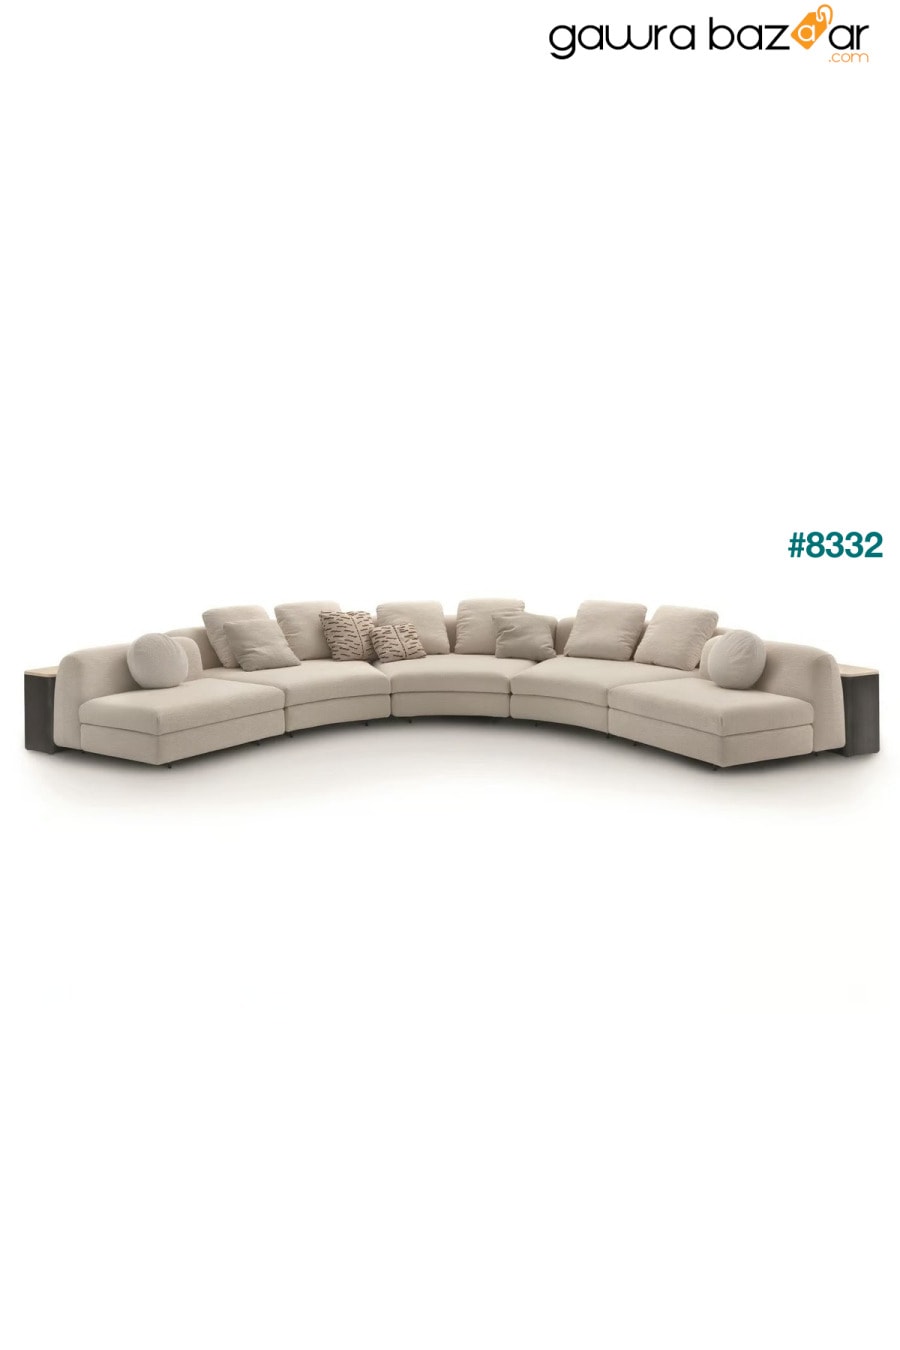 Parlex-A طقم أريكة تيدي بيضاوي الشكل مكون من 5 قطع من طاولة القهوة في غرفة المعيشة ومجموعة L في الزاوية الوظيفية Passion 1